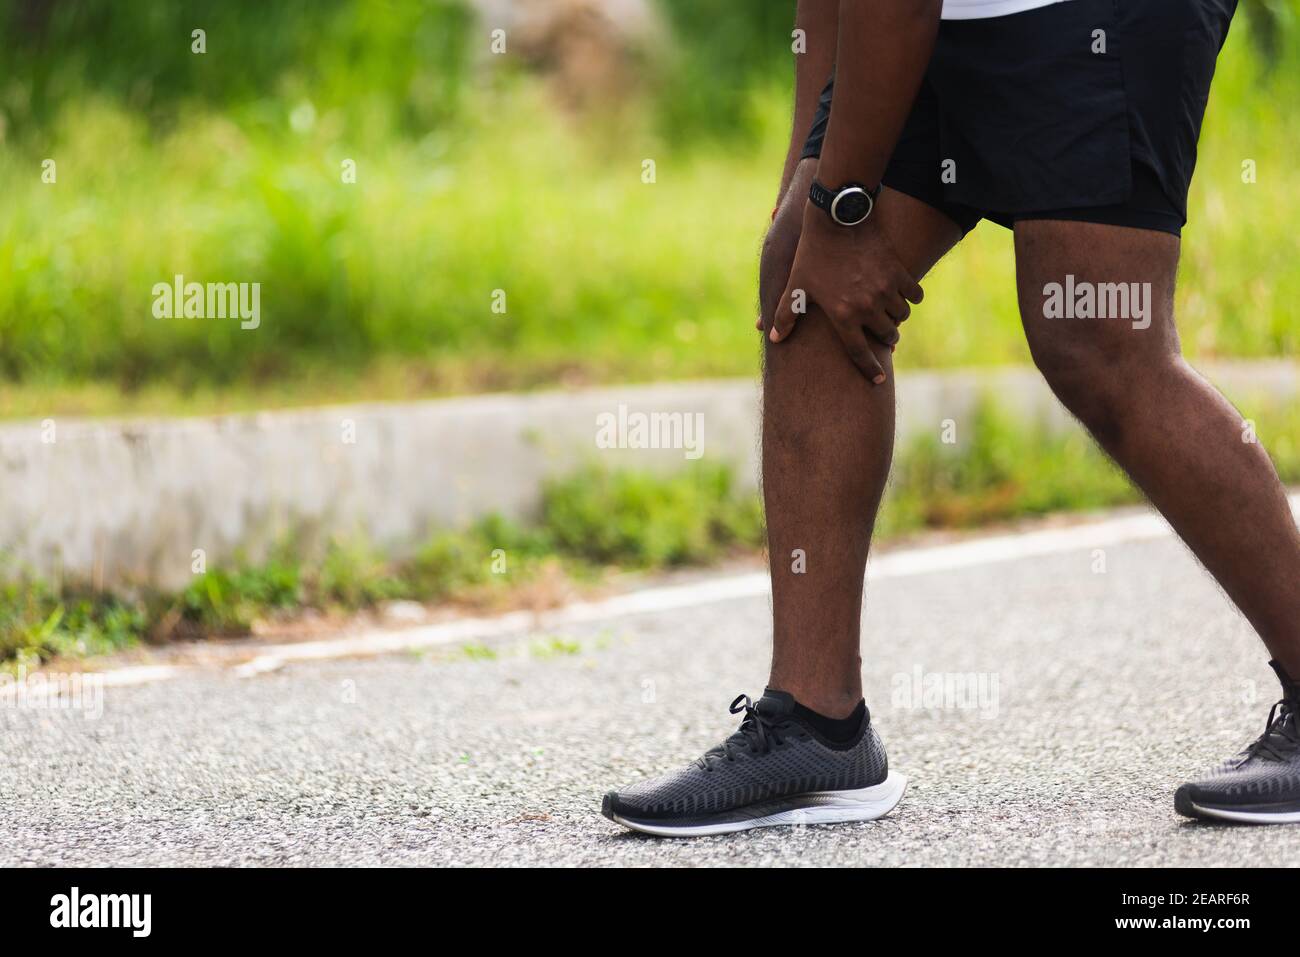 sport runner black man wear watch hands joint hold knee pain Stock Photo